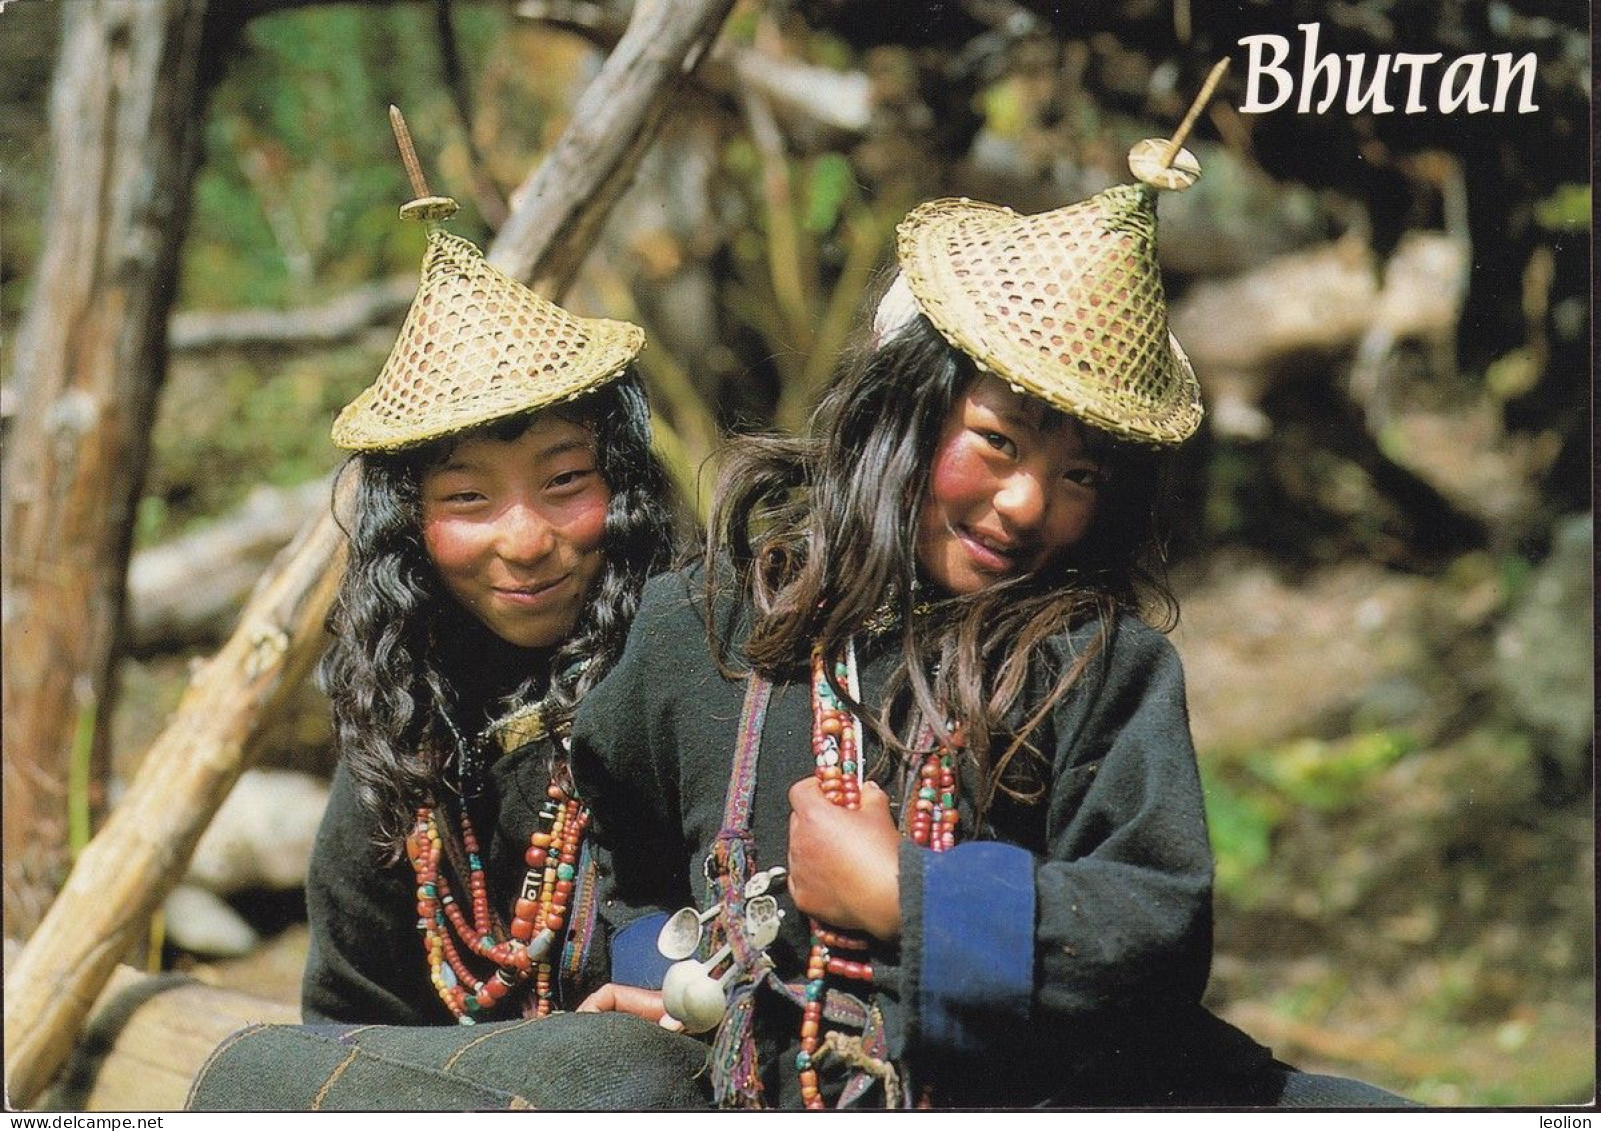 BHUTAN Village Girls LAYA Etho Metho Tours / Glenn Rowley / Himalayan Images Picture Postcard BHOUTAN - Bhutan